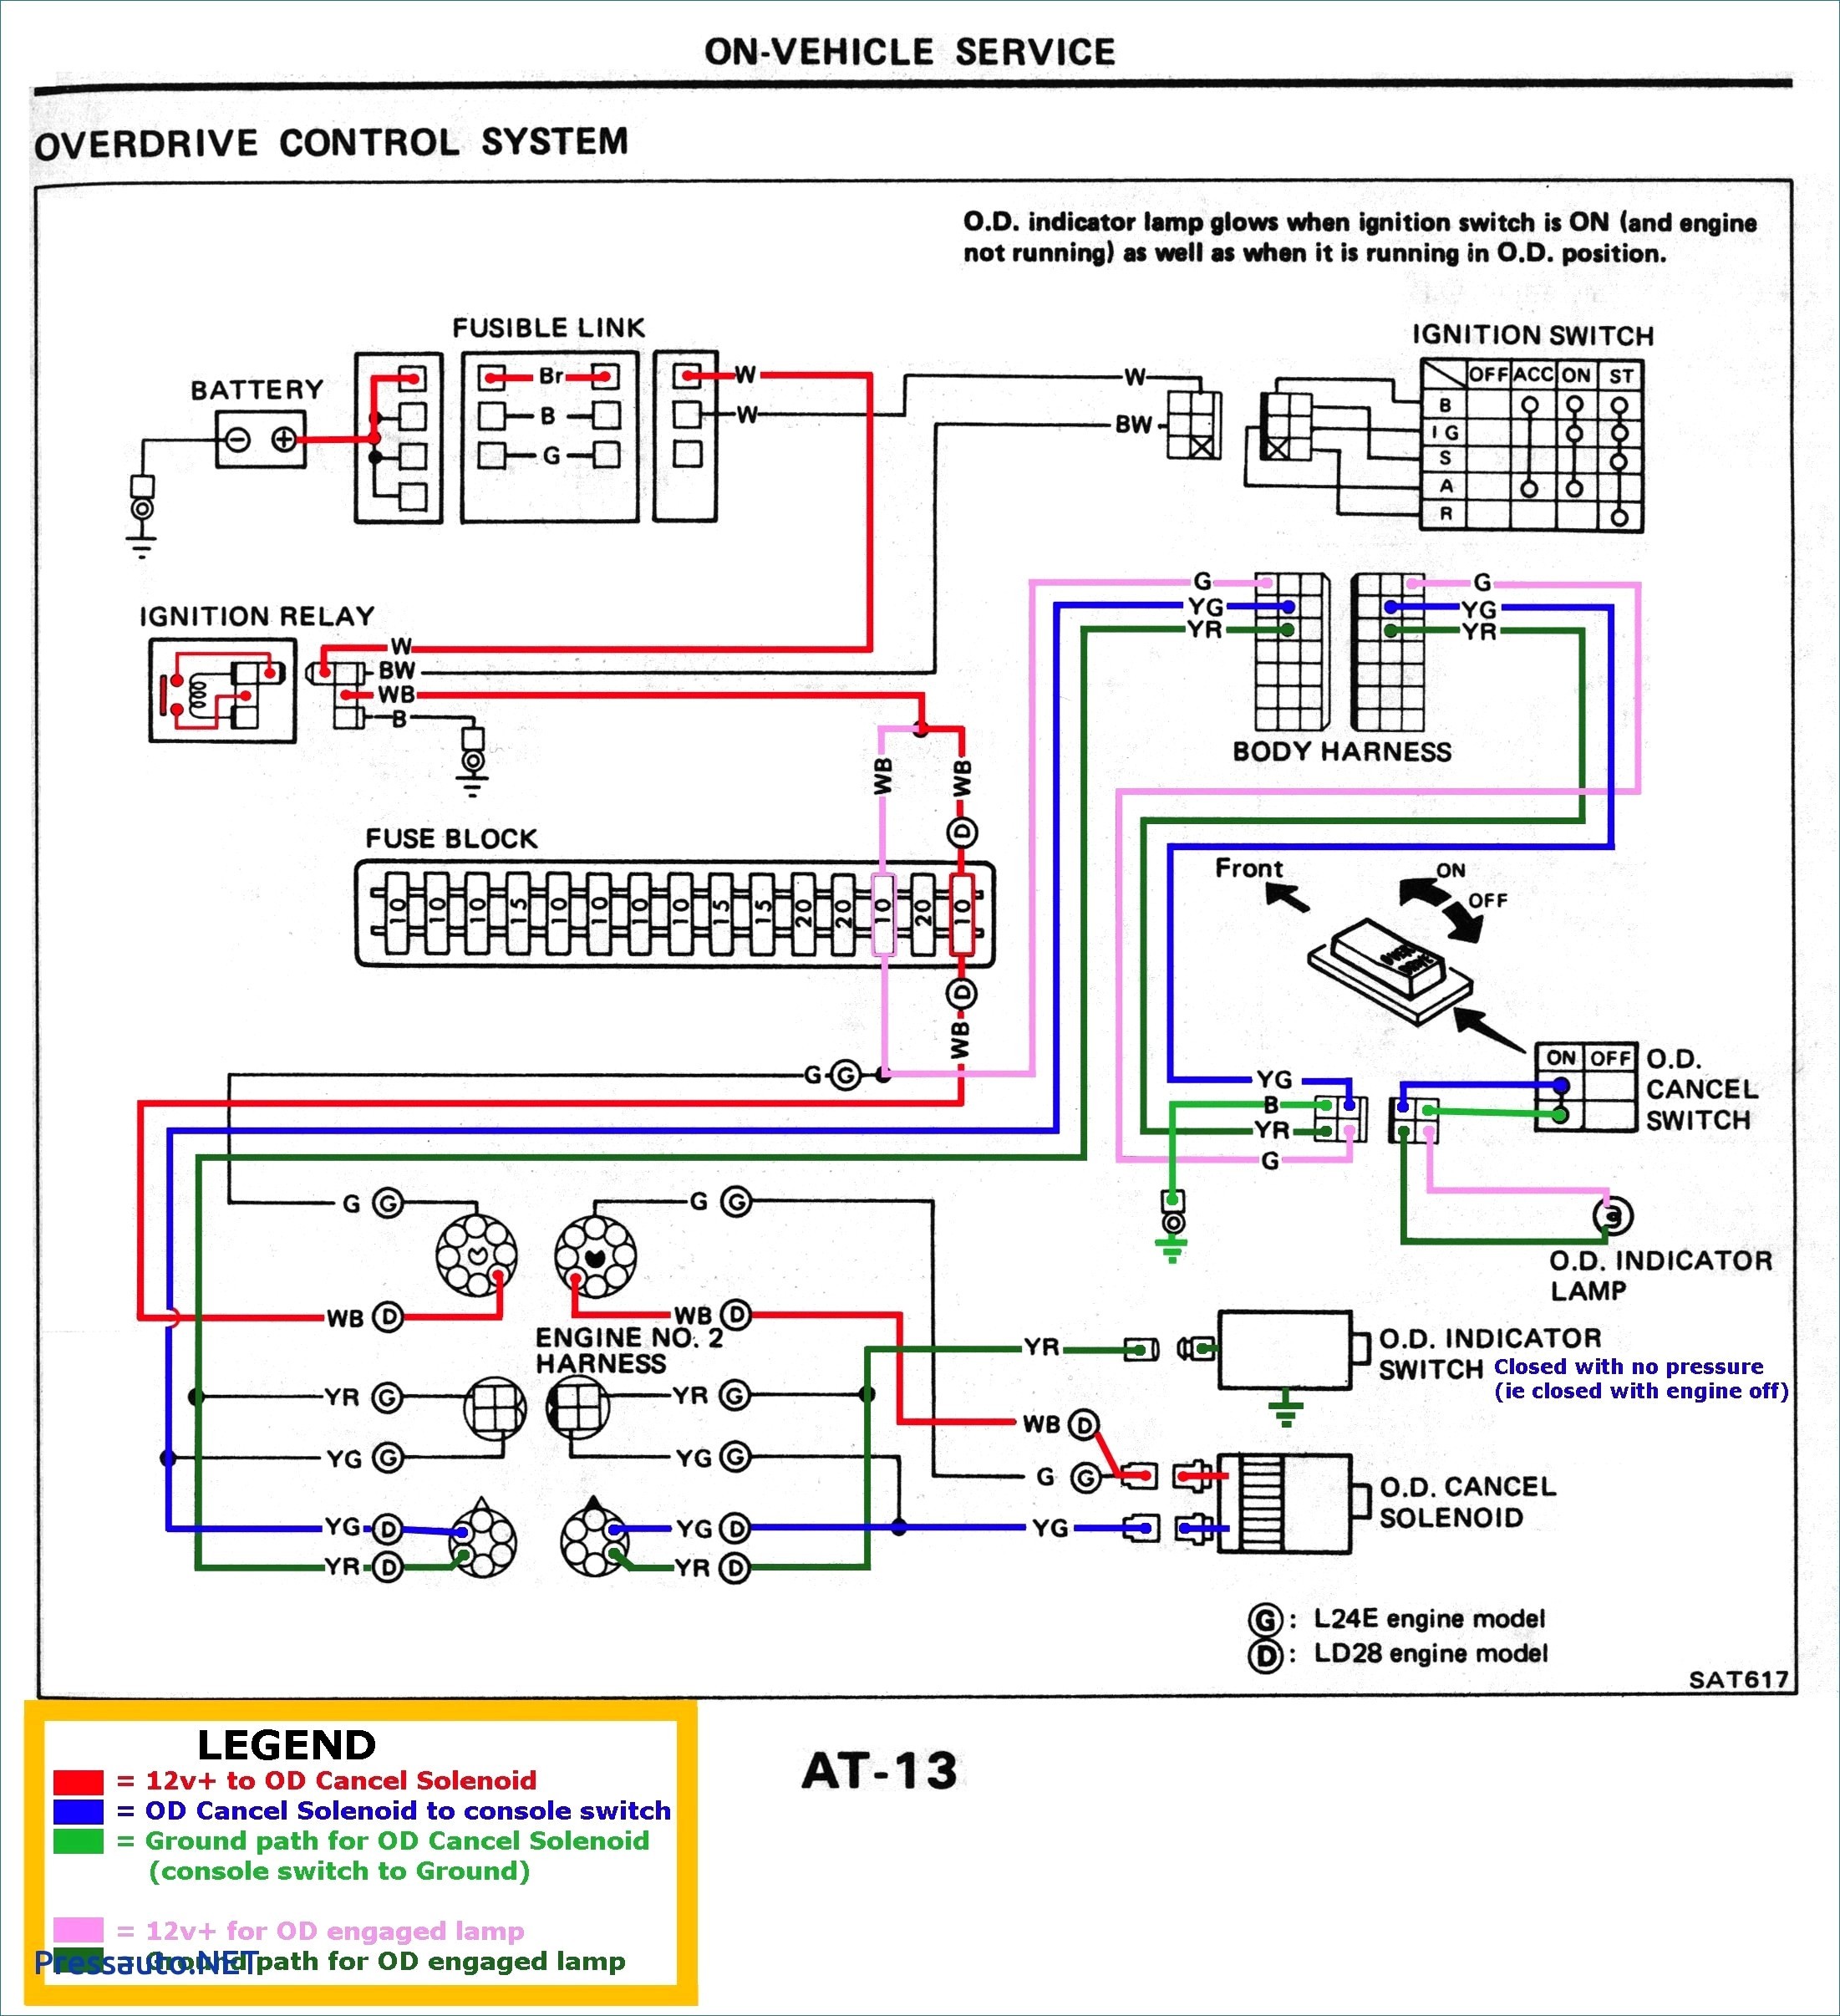 Kohler Engine Wiring Diagram Olympian Generator Wiring Diagram 4001e Kohler sources All Of Kohler Engine Wiring Diagram